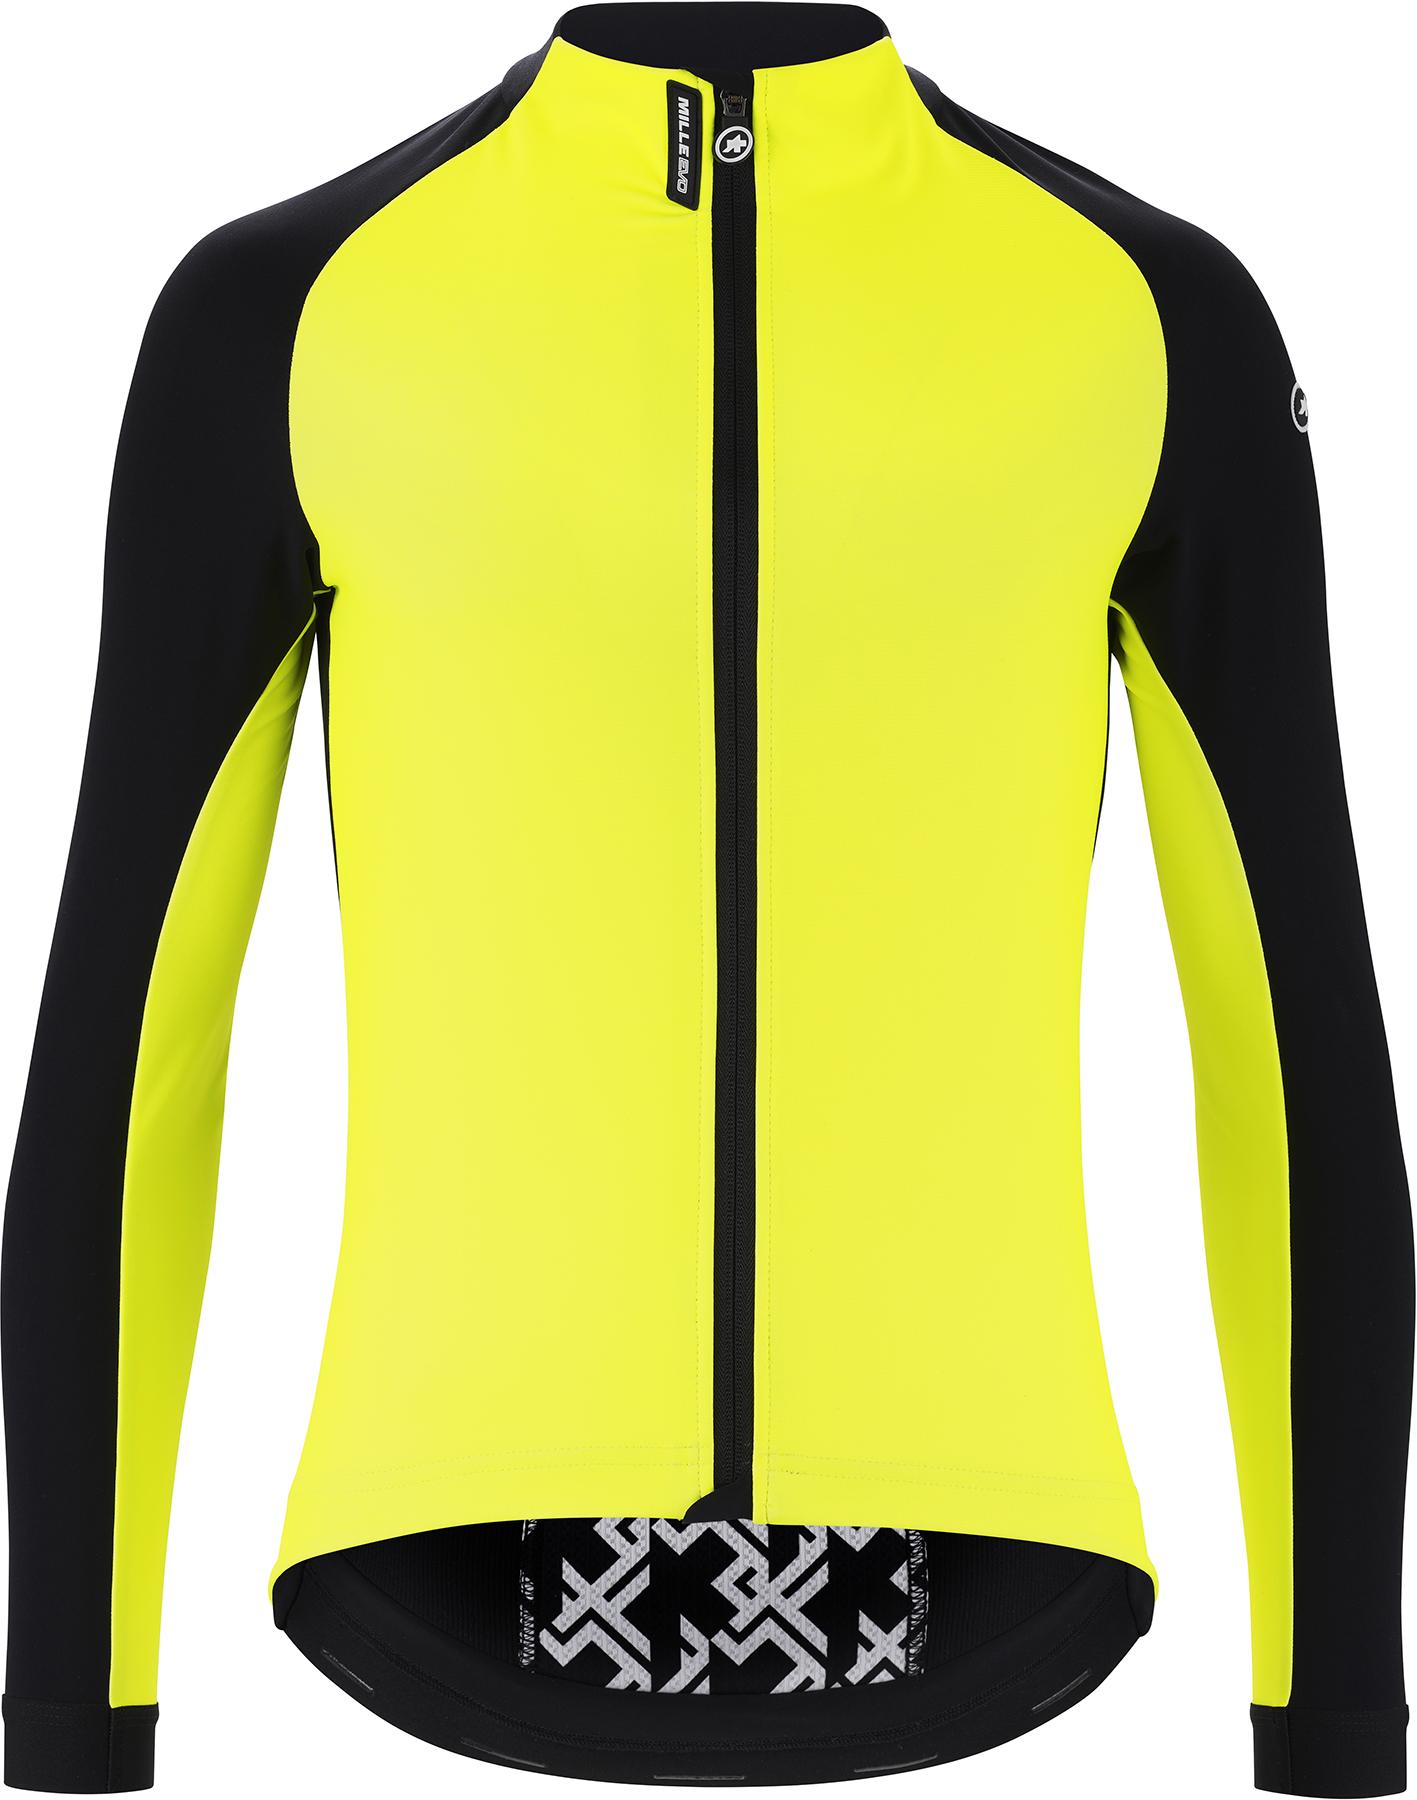 Assos Mille Gt Winter Jacket Evo - Fluorescent Yellow